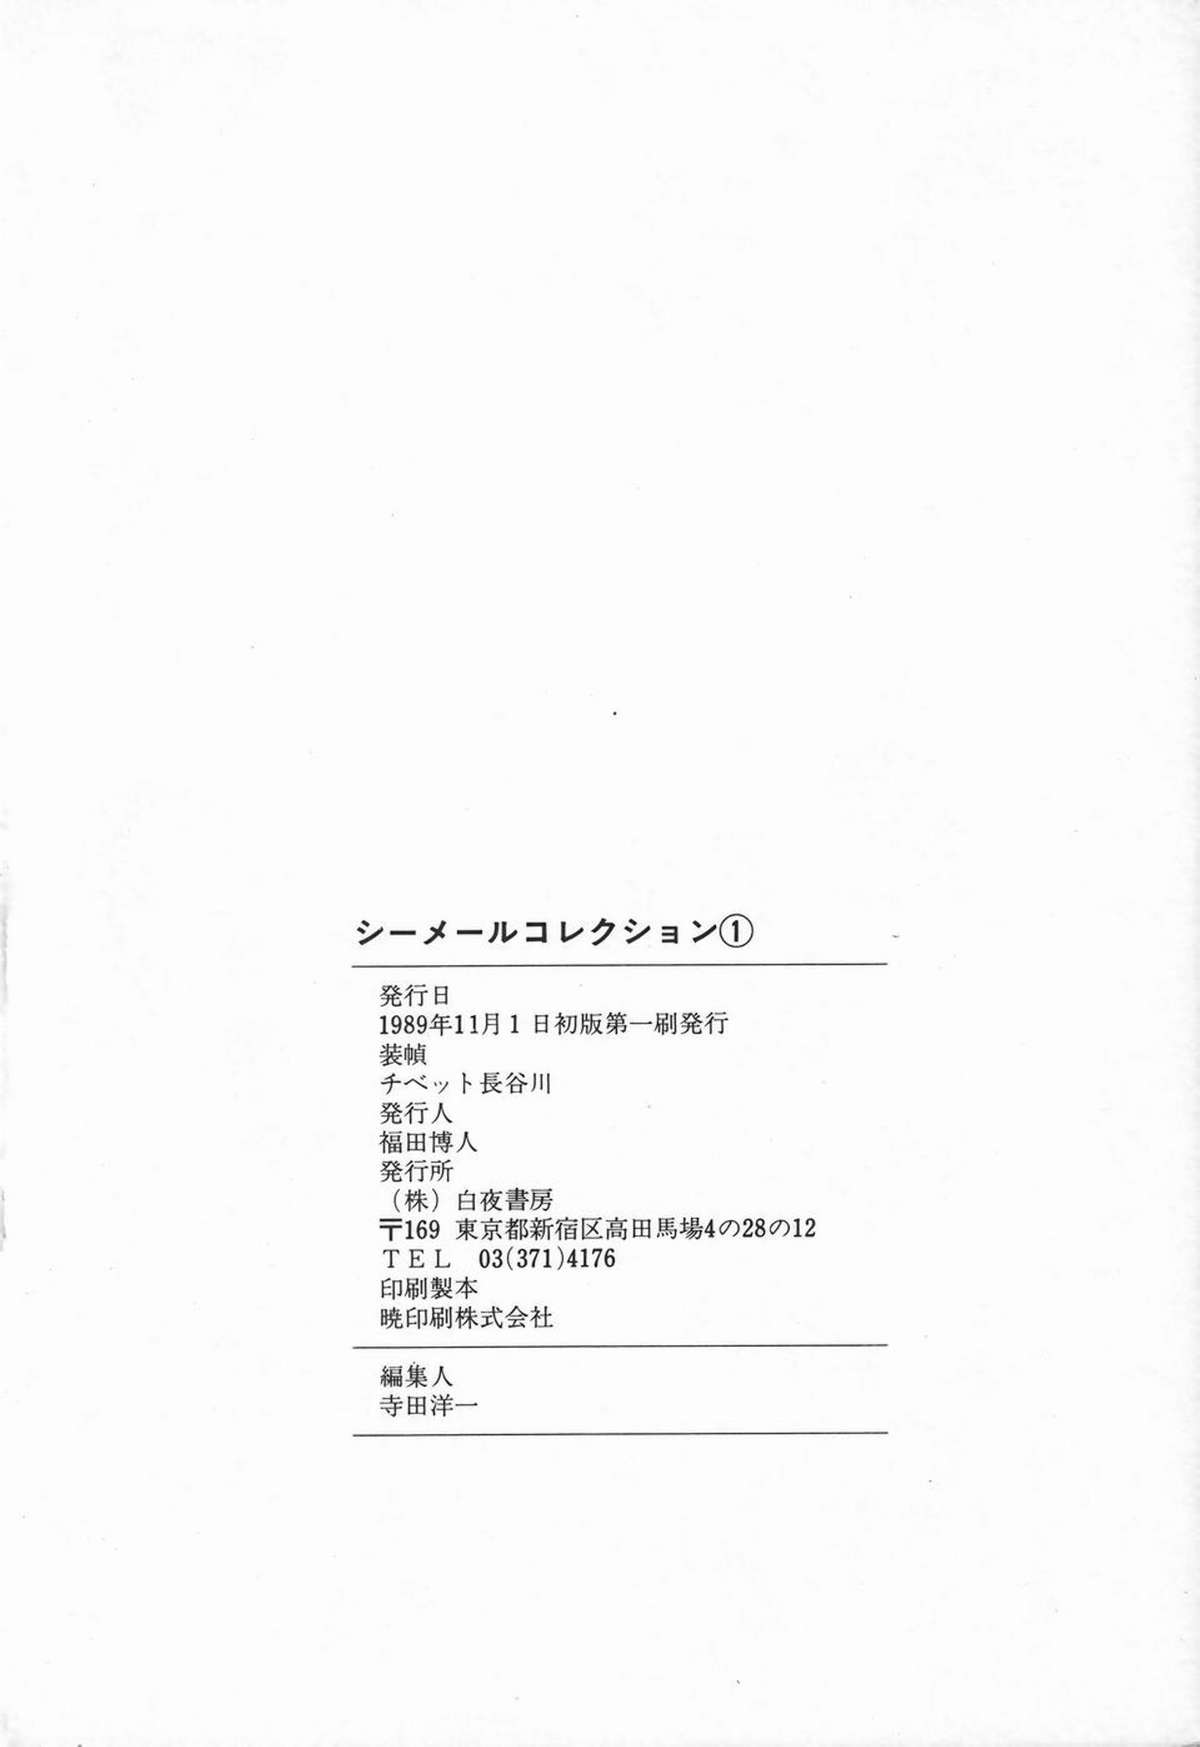 Anthology - Shemale Collection 1 シーメールコレクション1